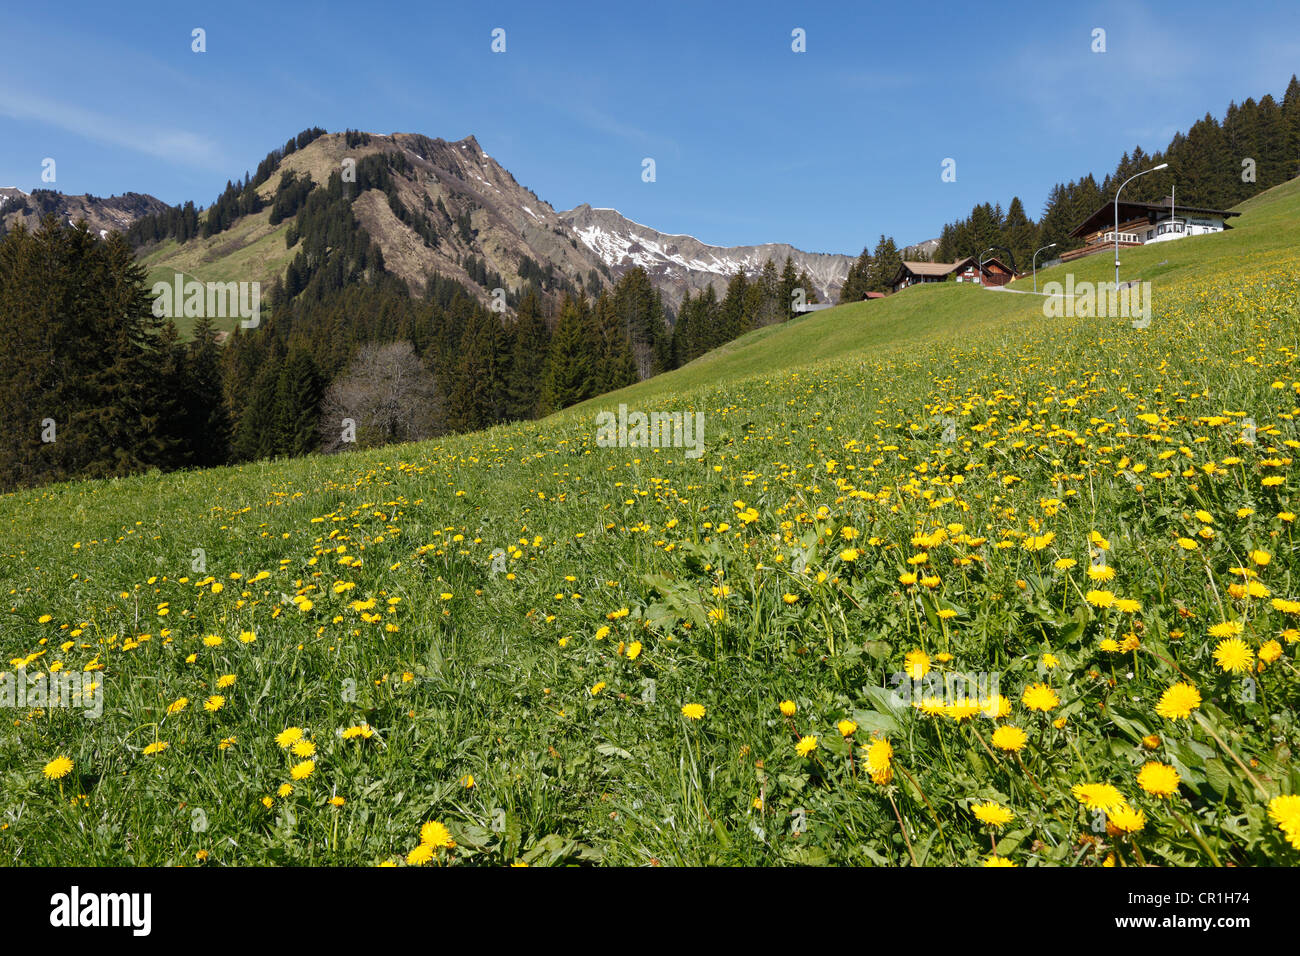 Mt. Unspitze and Starzelhaus lodge in Baad, Kleinwalsertal valley, Vorarlberg, Austria, Europe Stock Photo